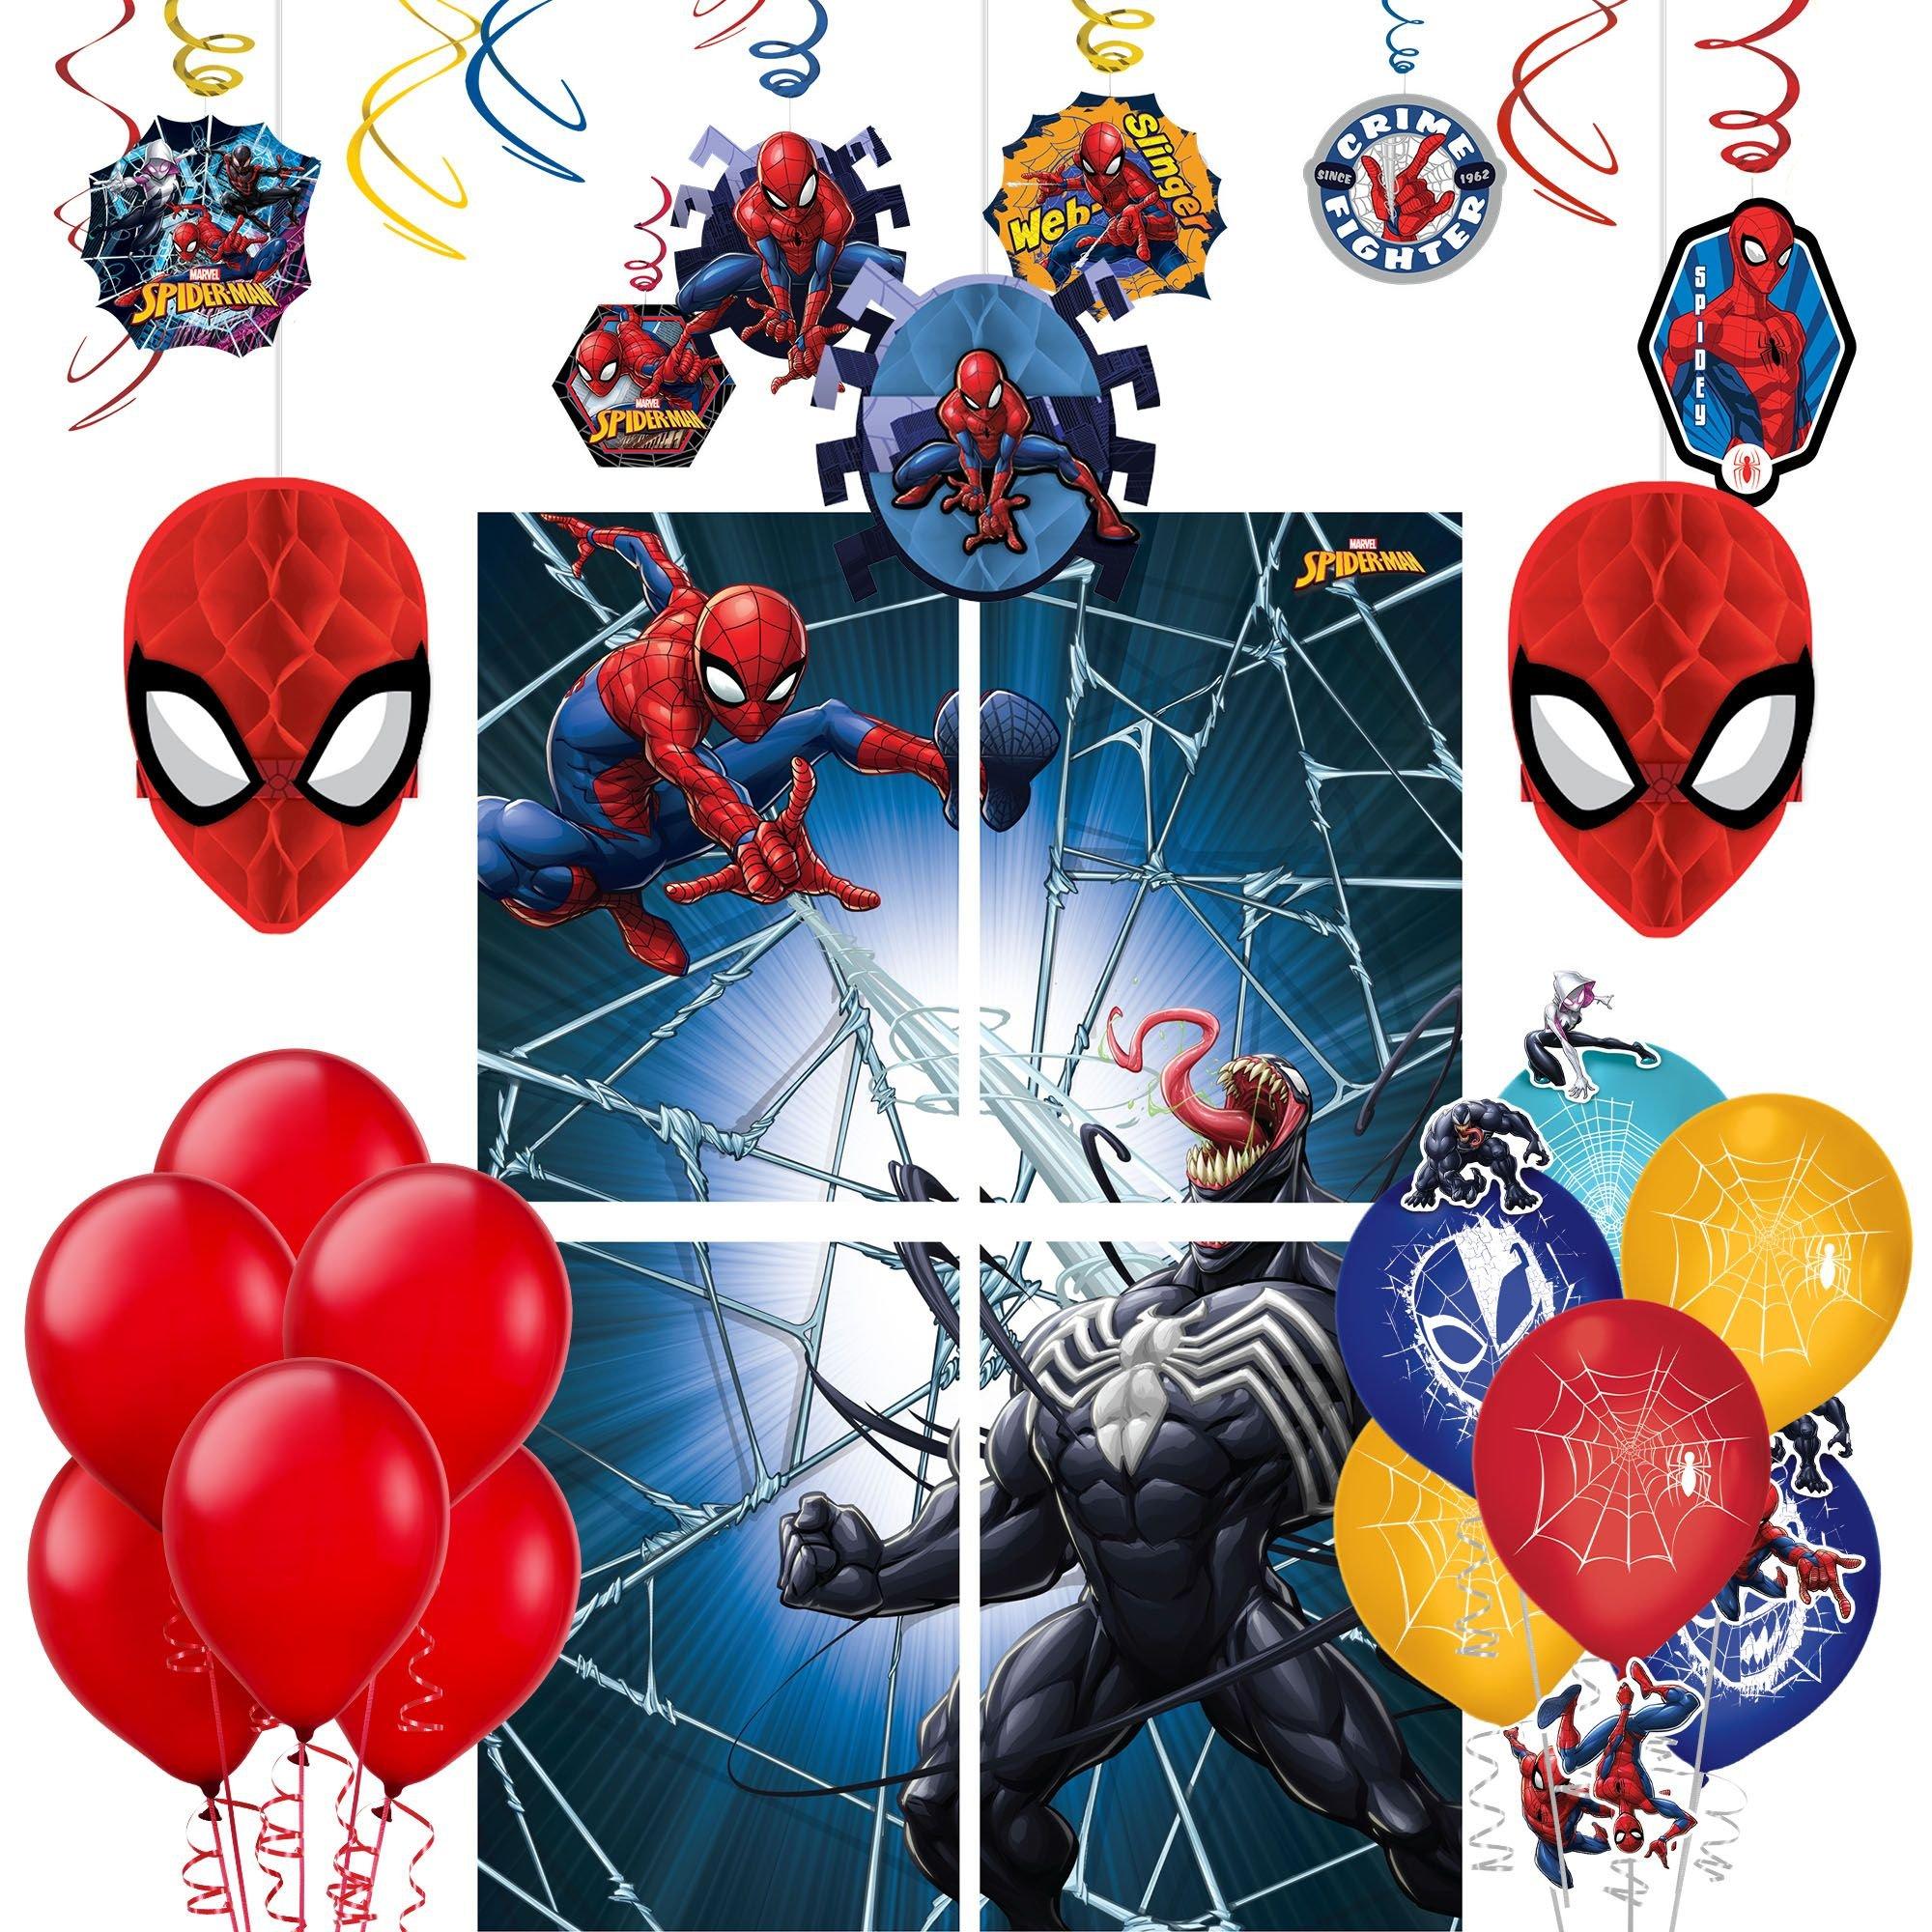 BLUE MARVEL SPIDERMAN Superhero Birthday Party Balloons Children